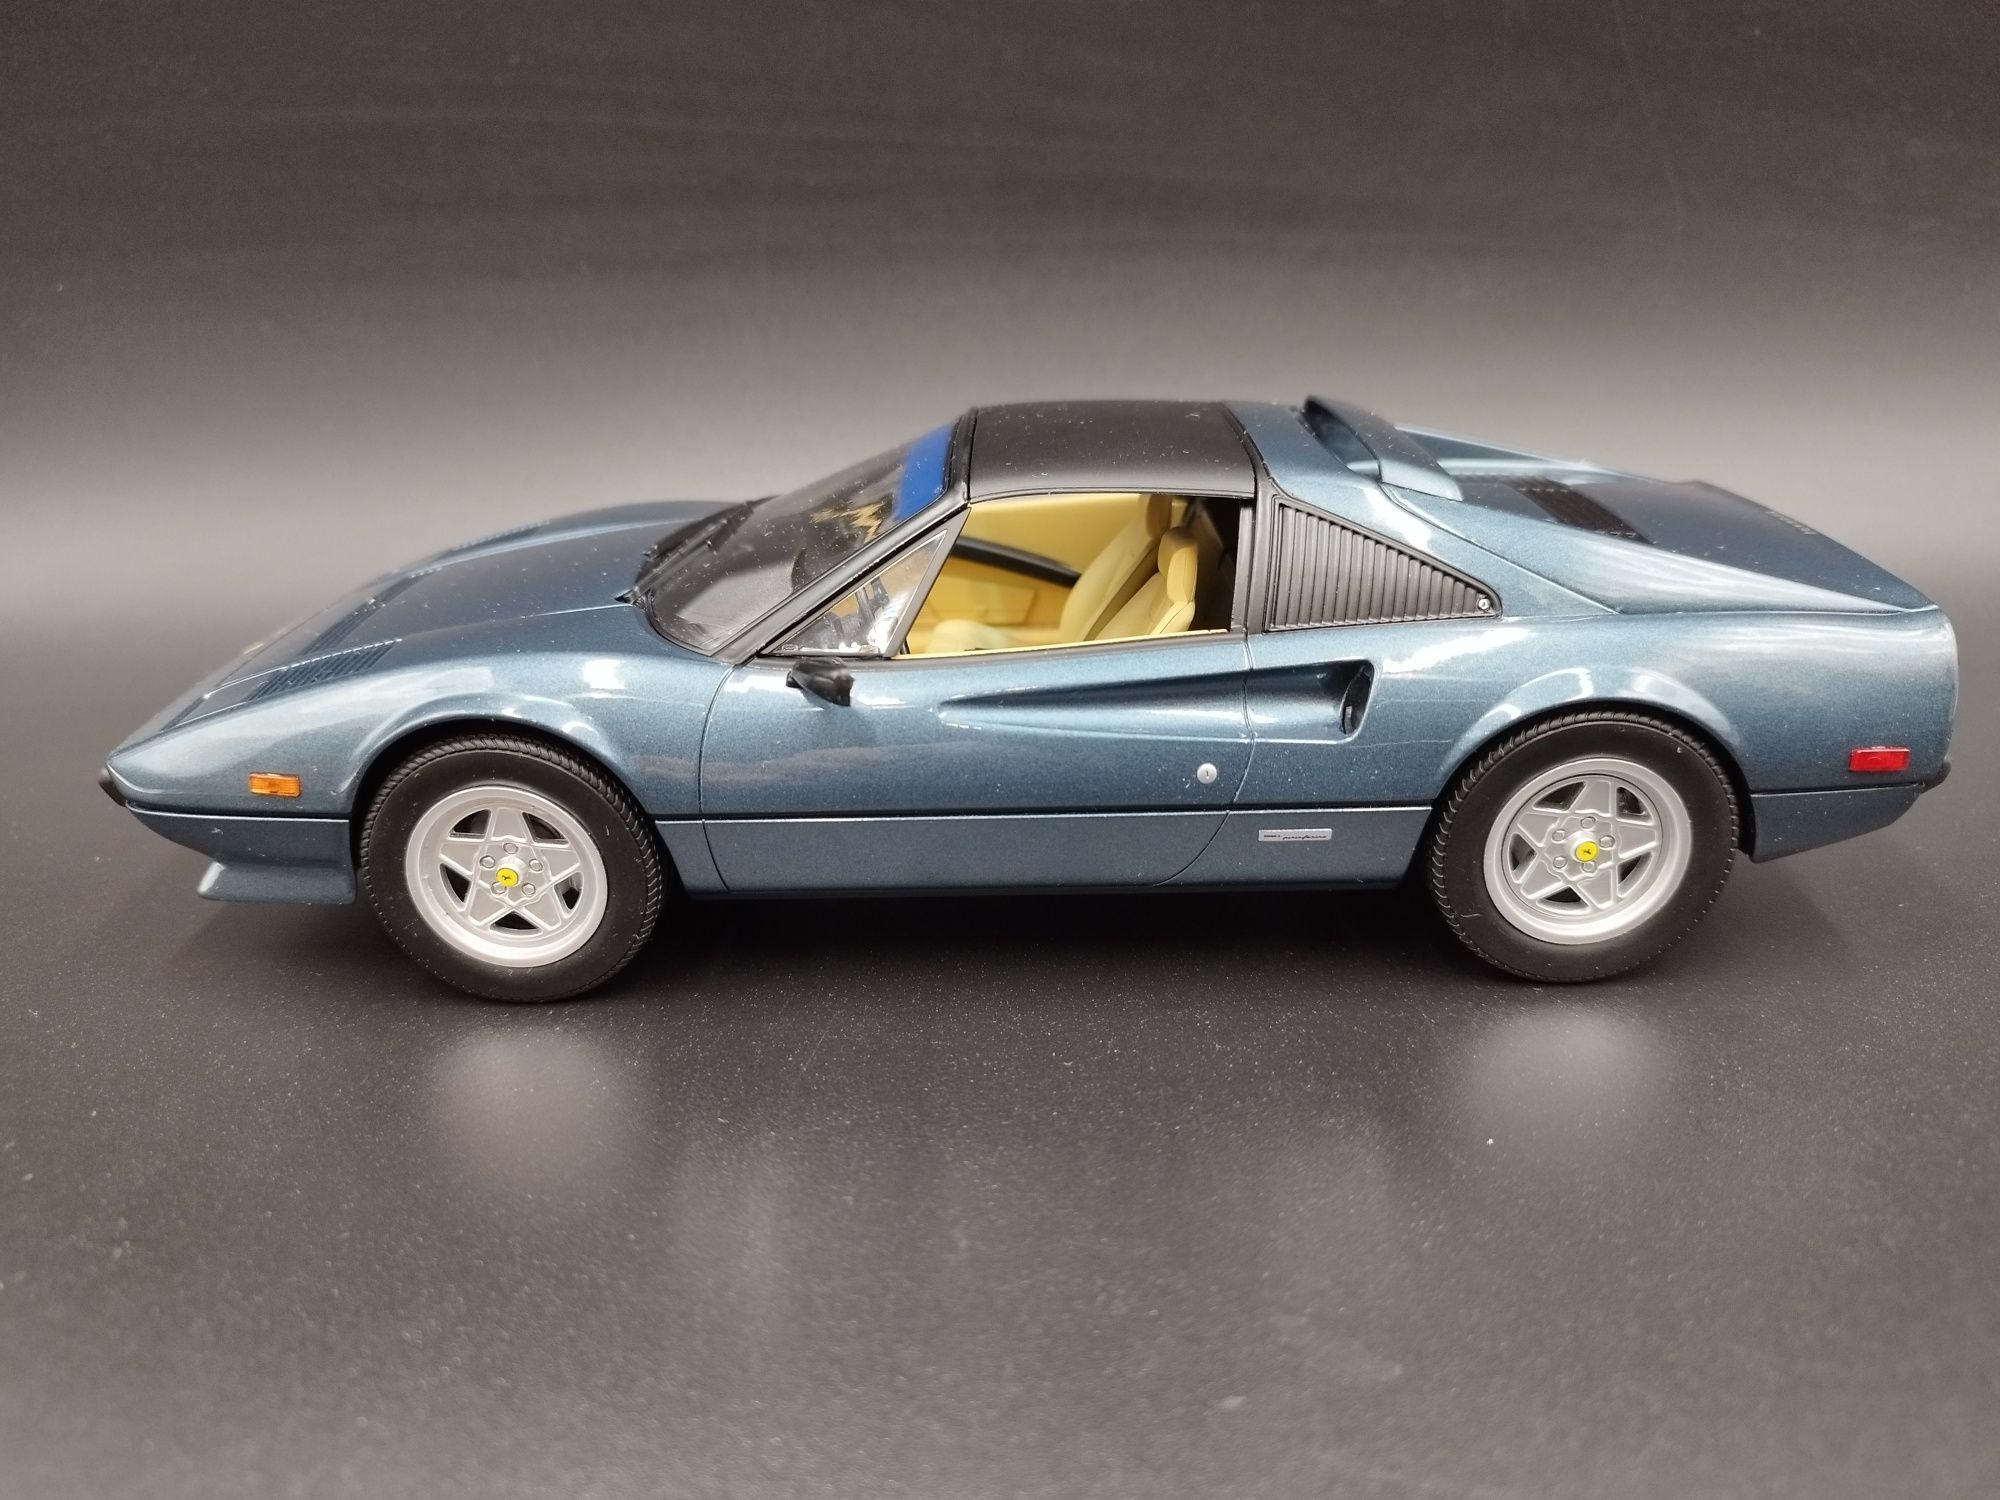 1:18 Norev 1982 Ferrari 308 GTS Blue  model